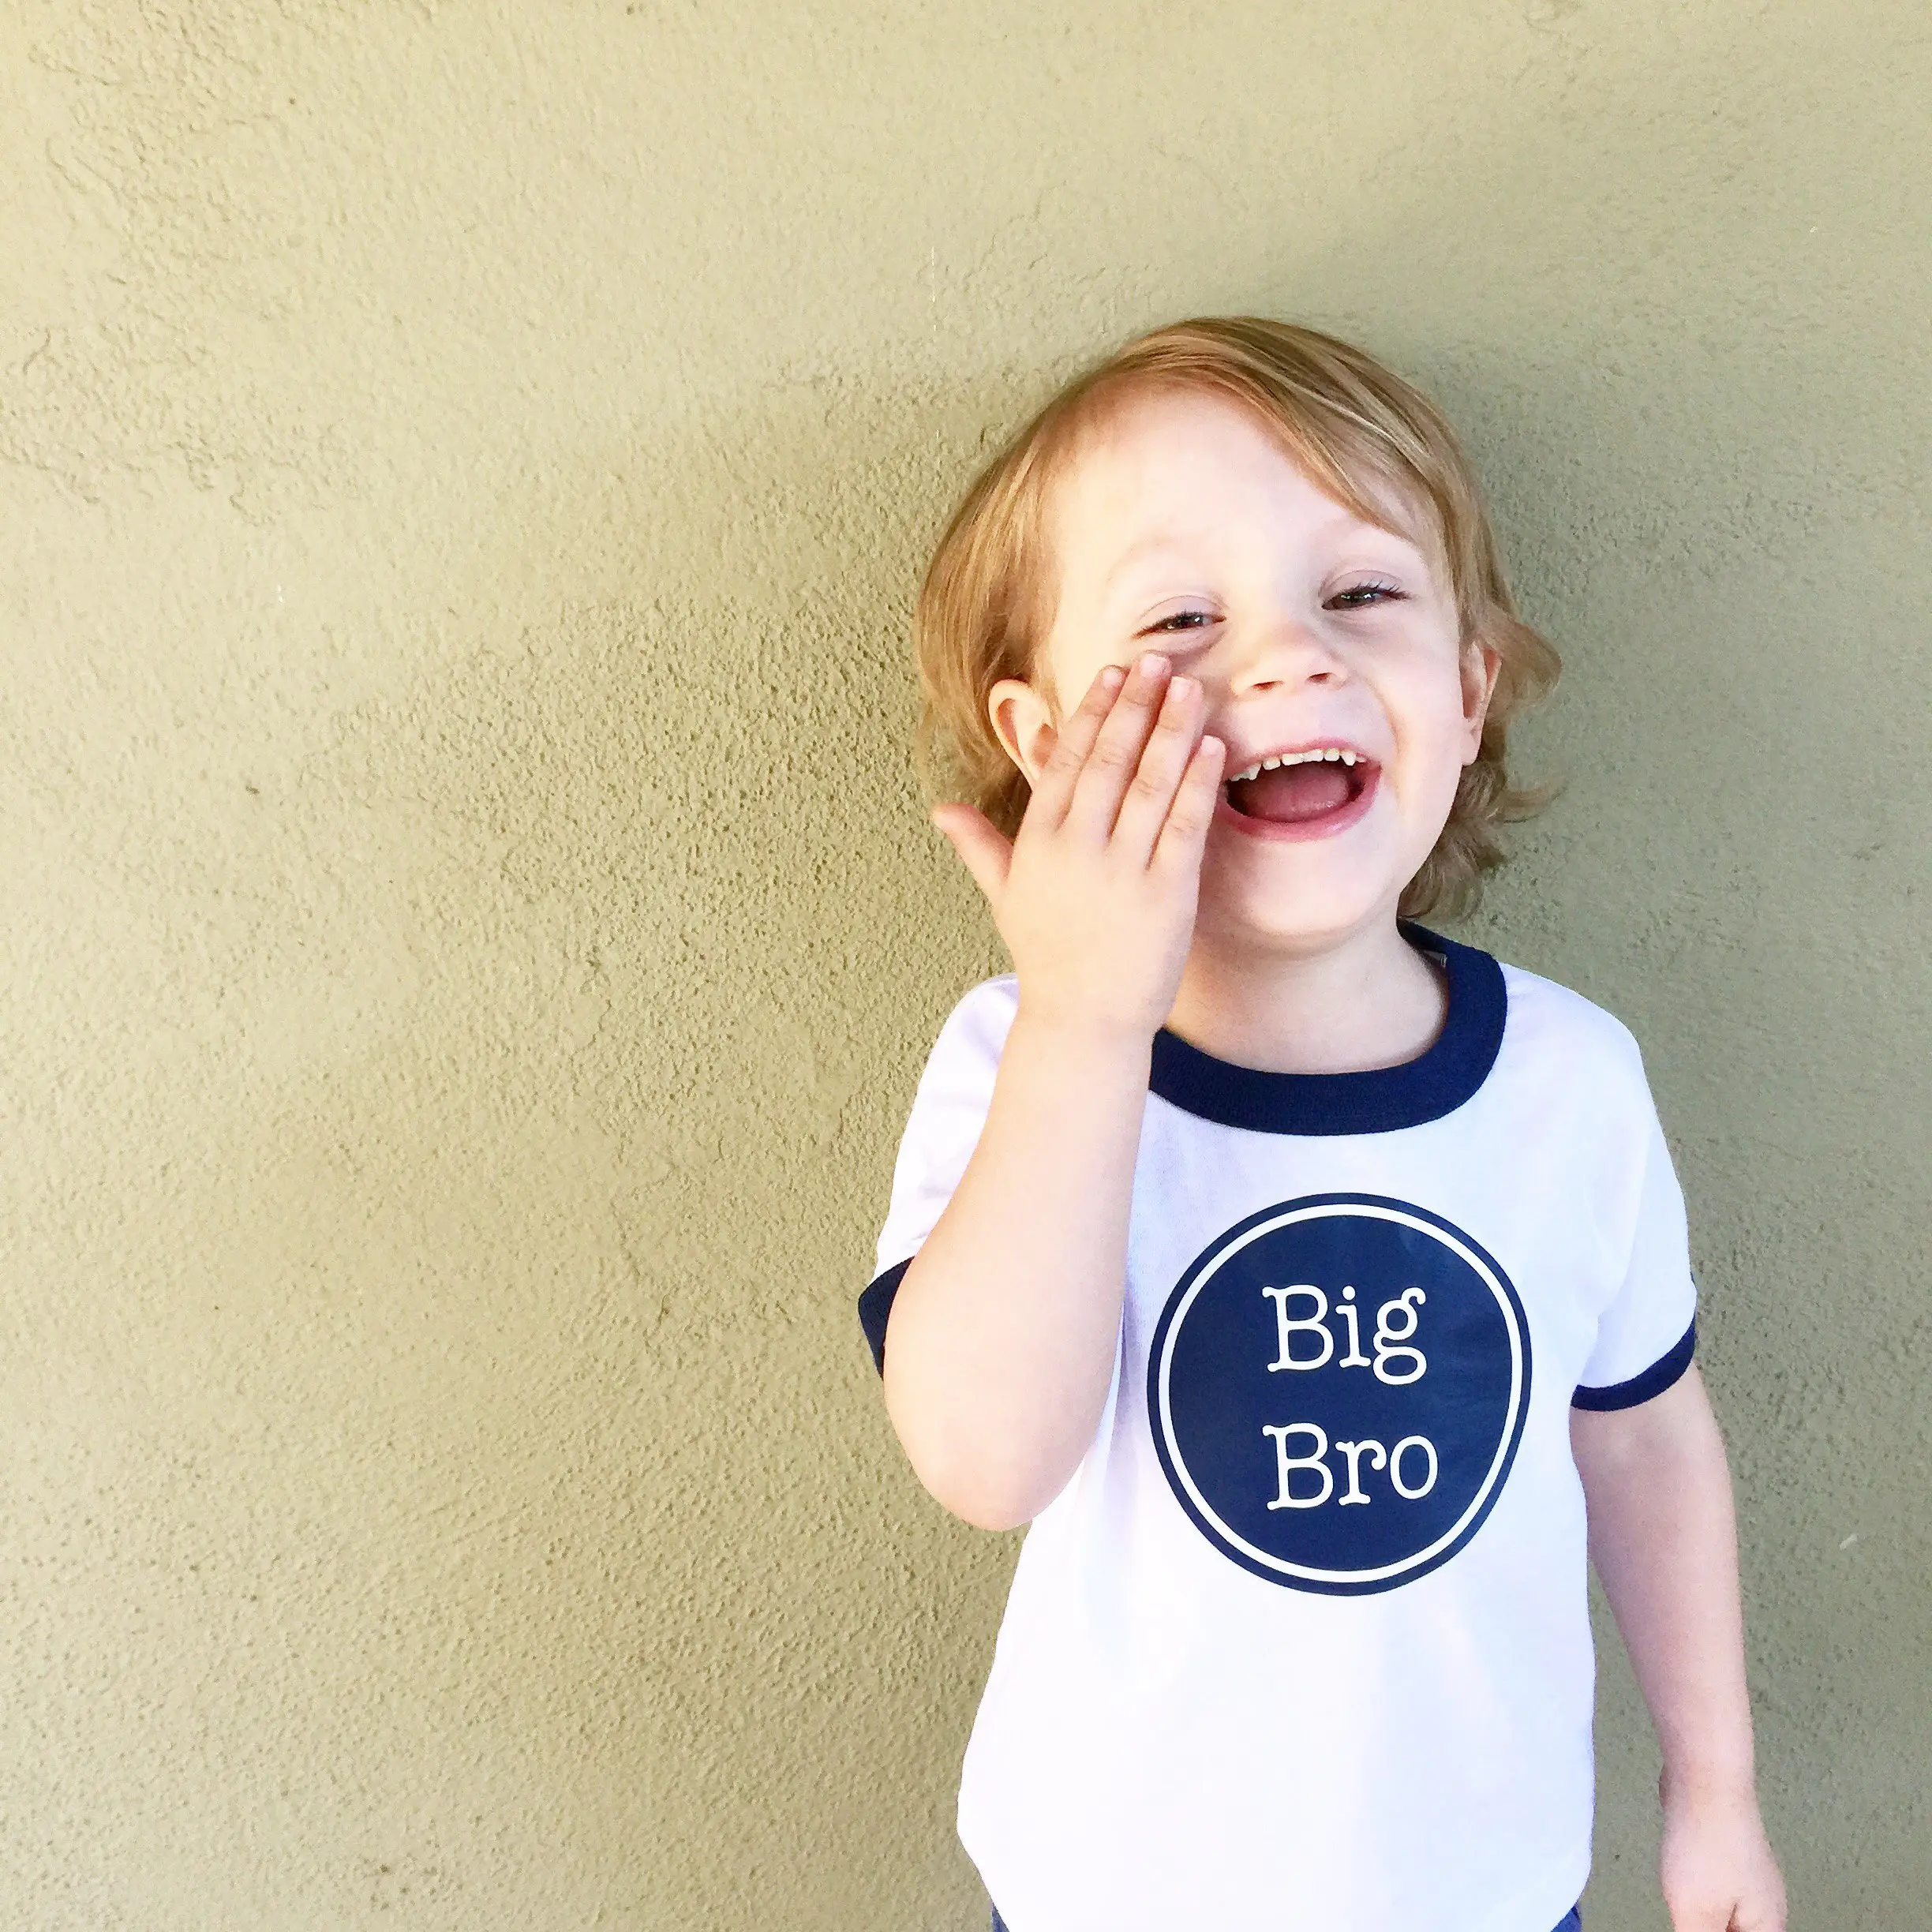 little boy with big bro shirt